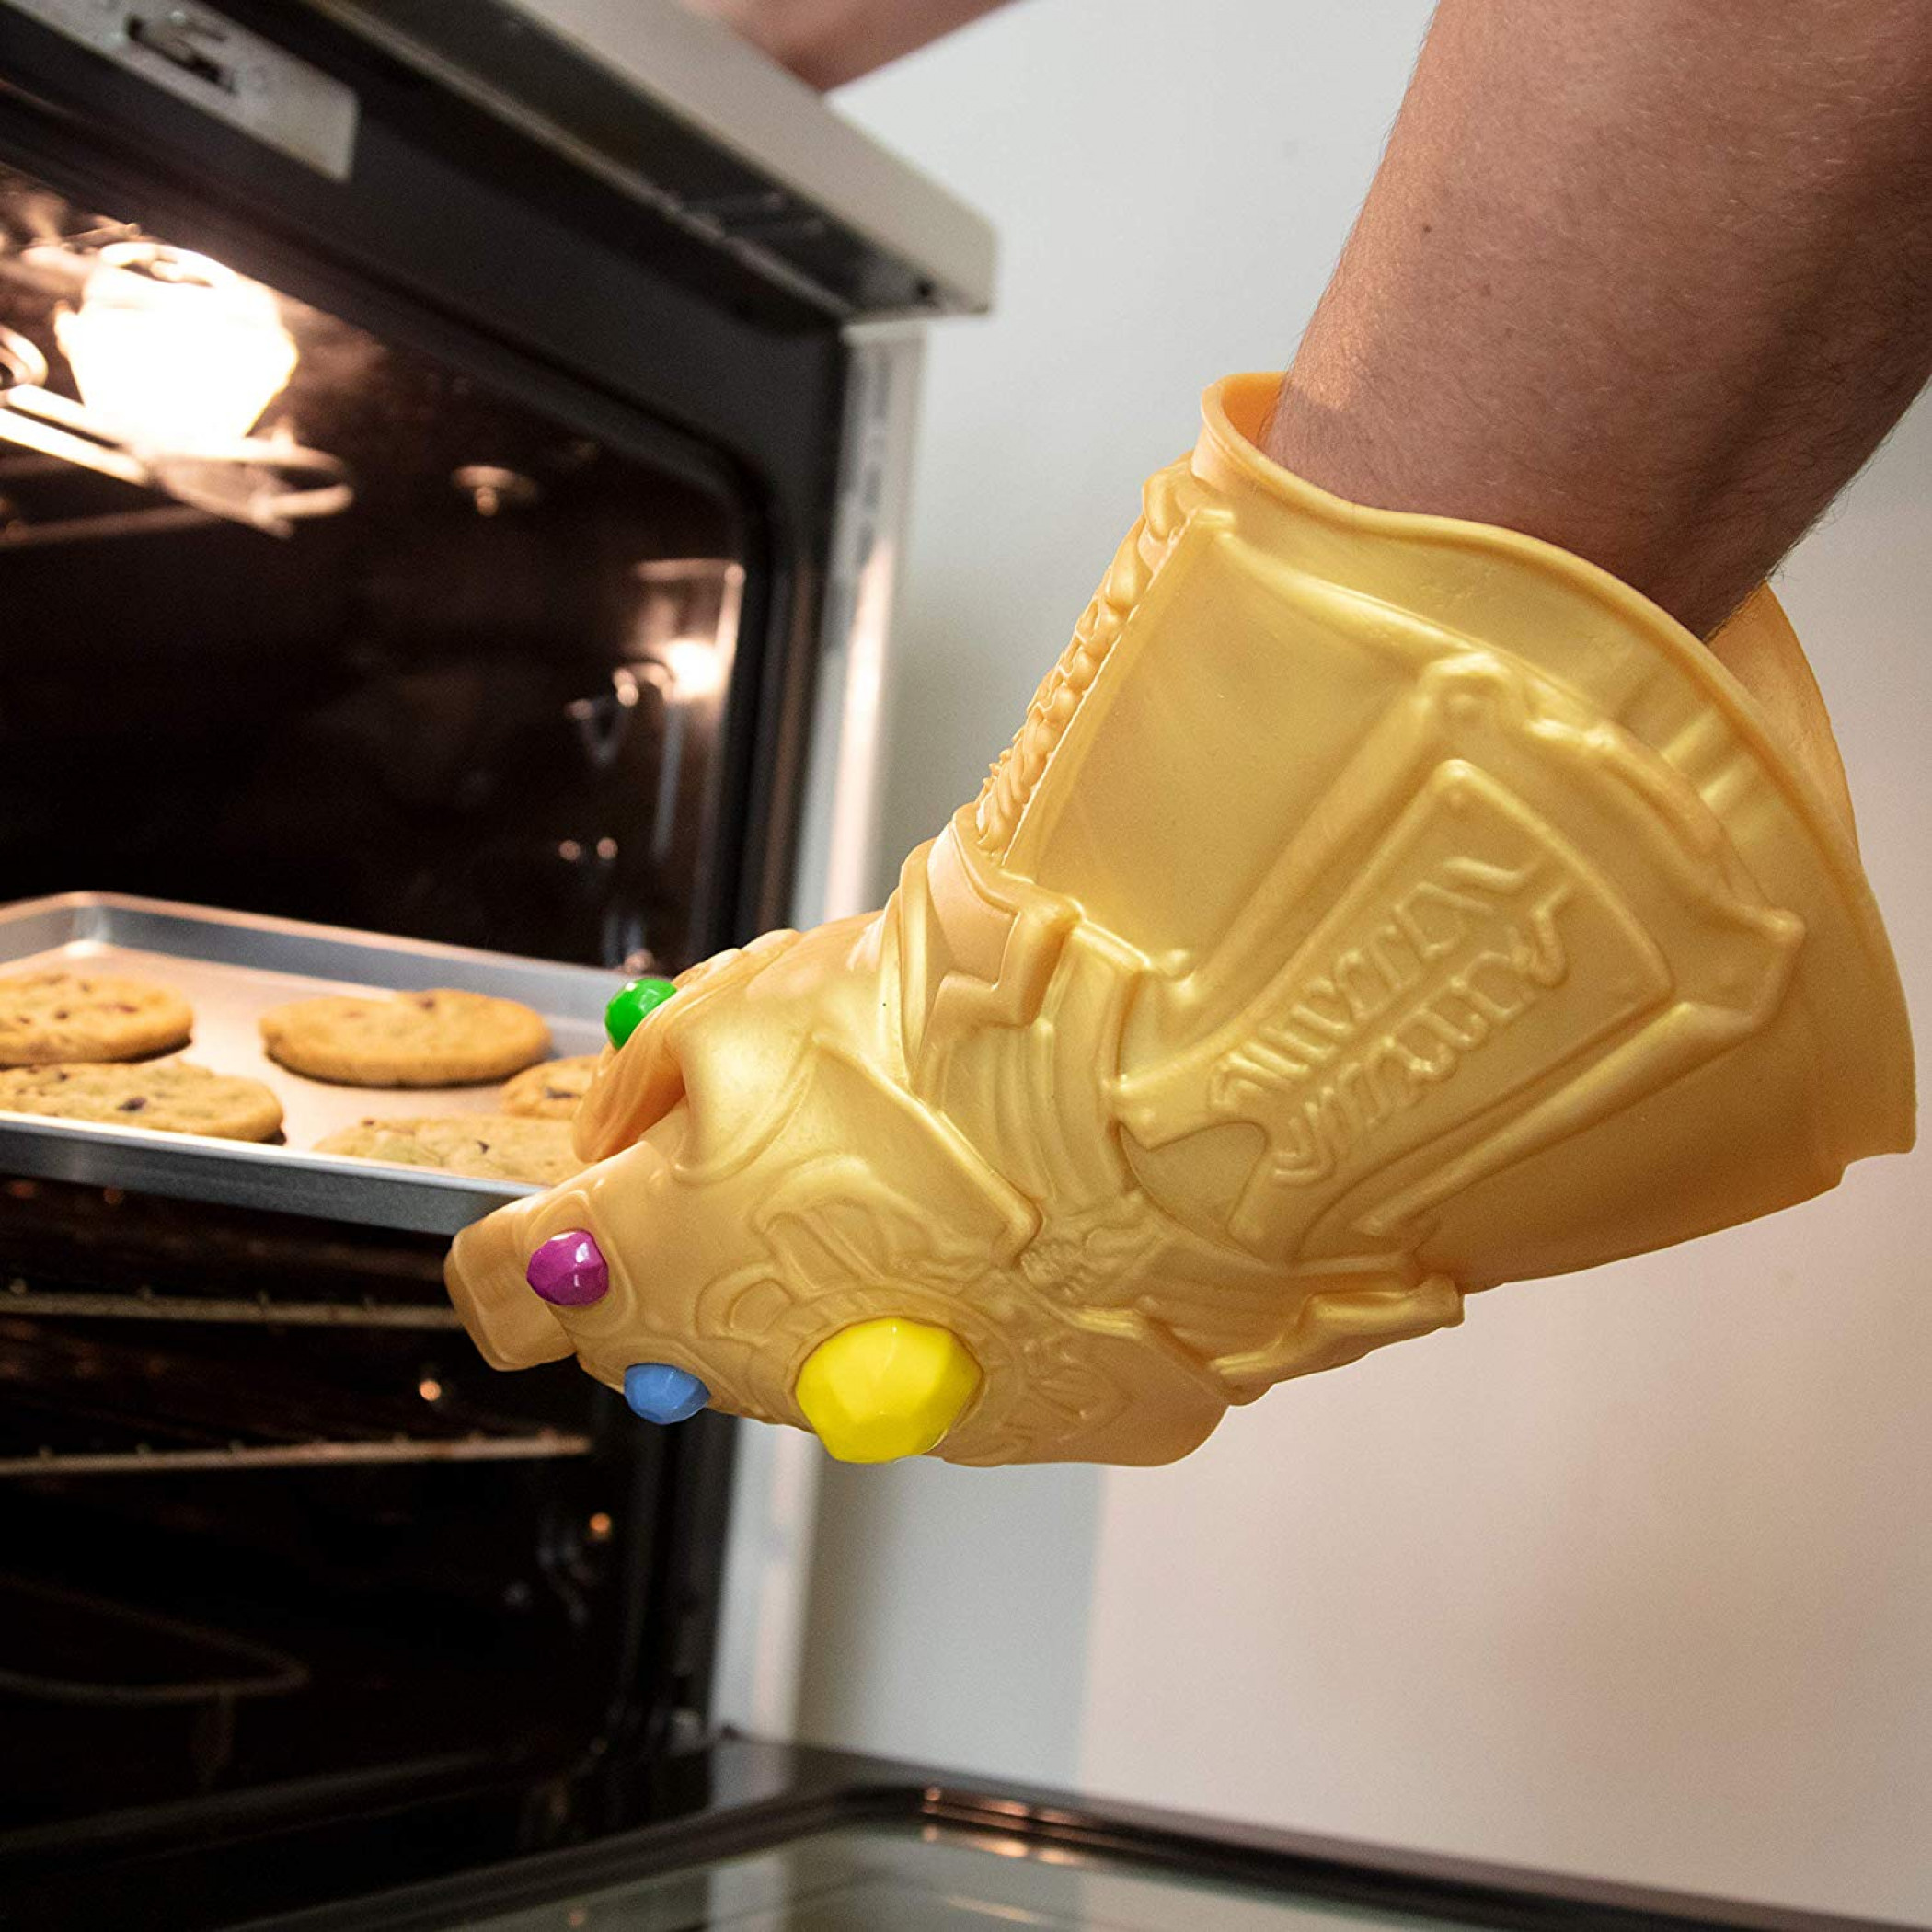 Marvel's Thanos Infinity Gauntlet Replica Silicone Glove Oven Mitt